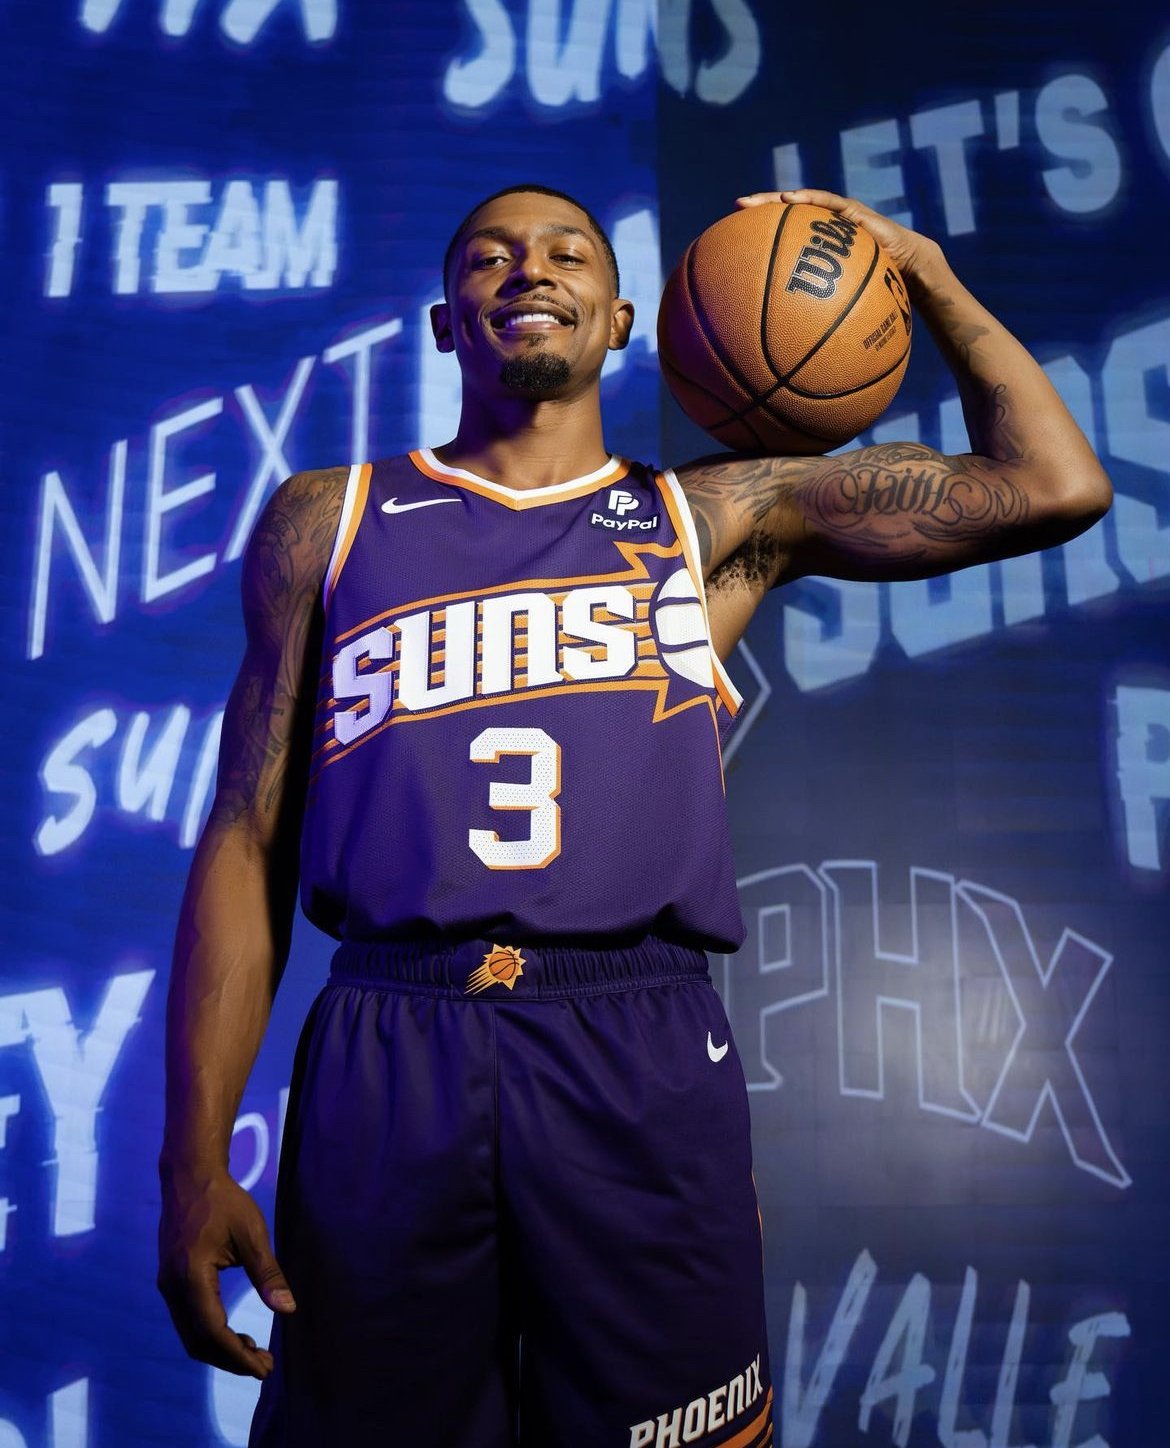 Phoenix Suns bringing back classic 1990s 'sunburst' uniforms - ESPN